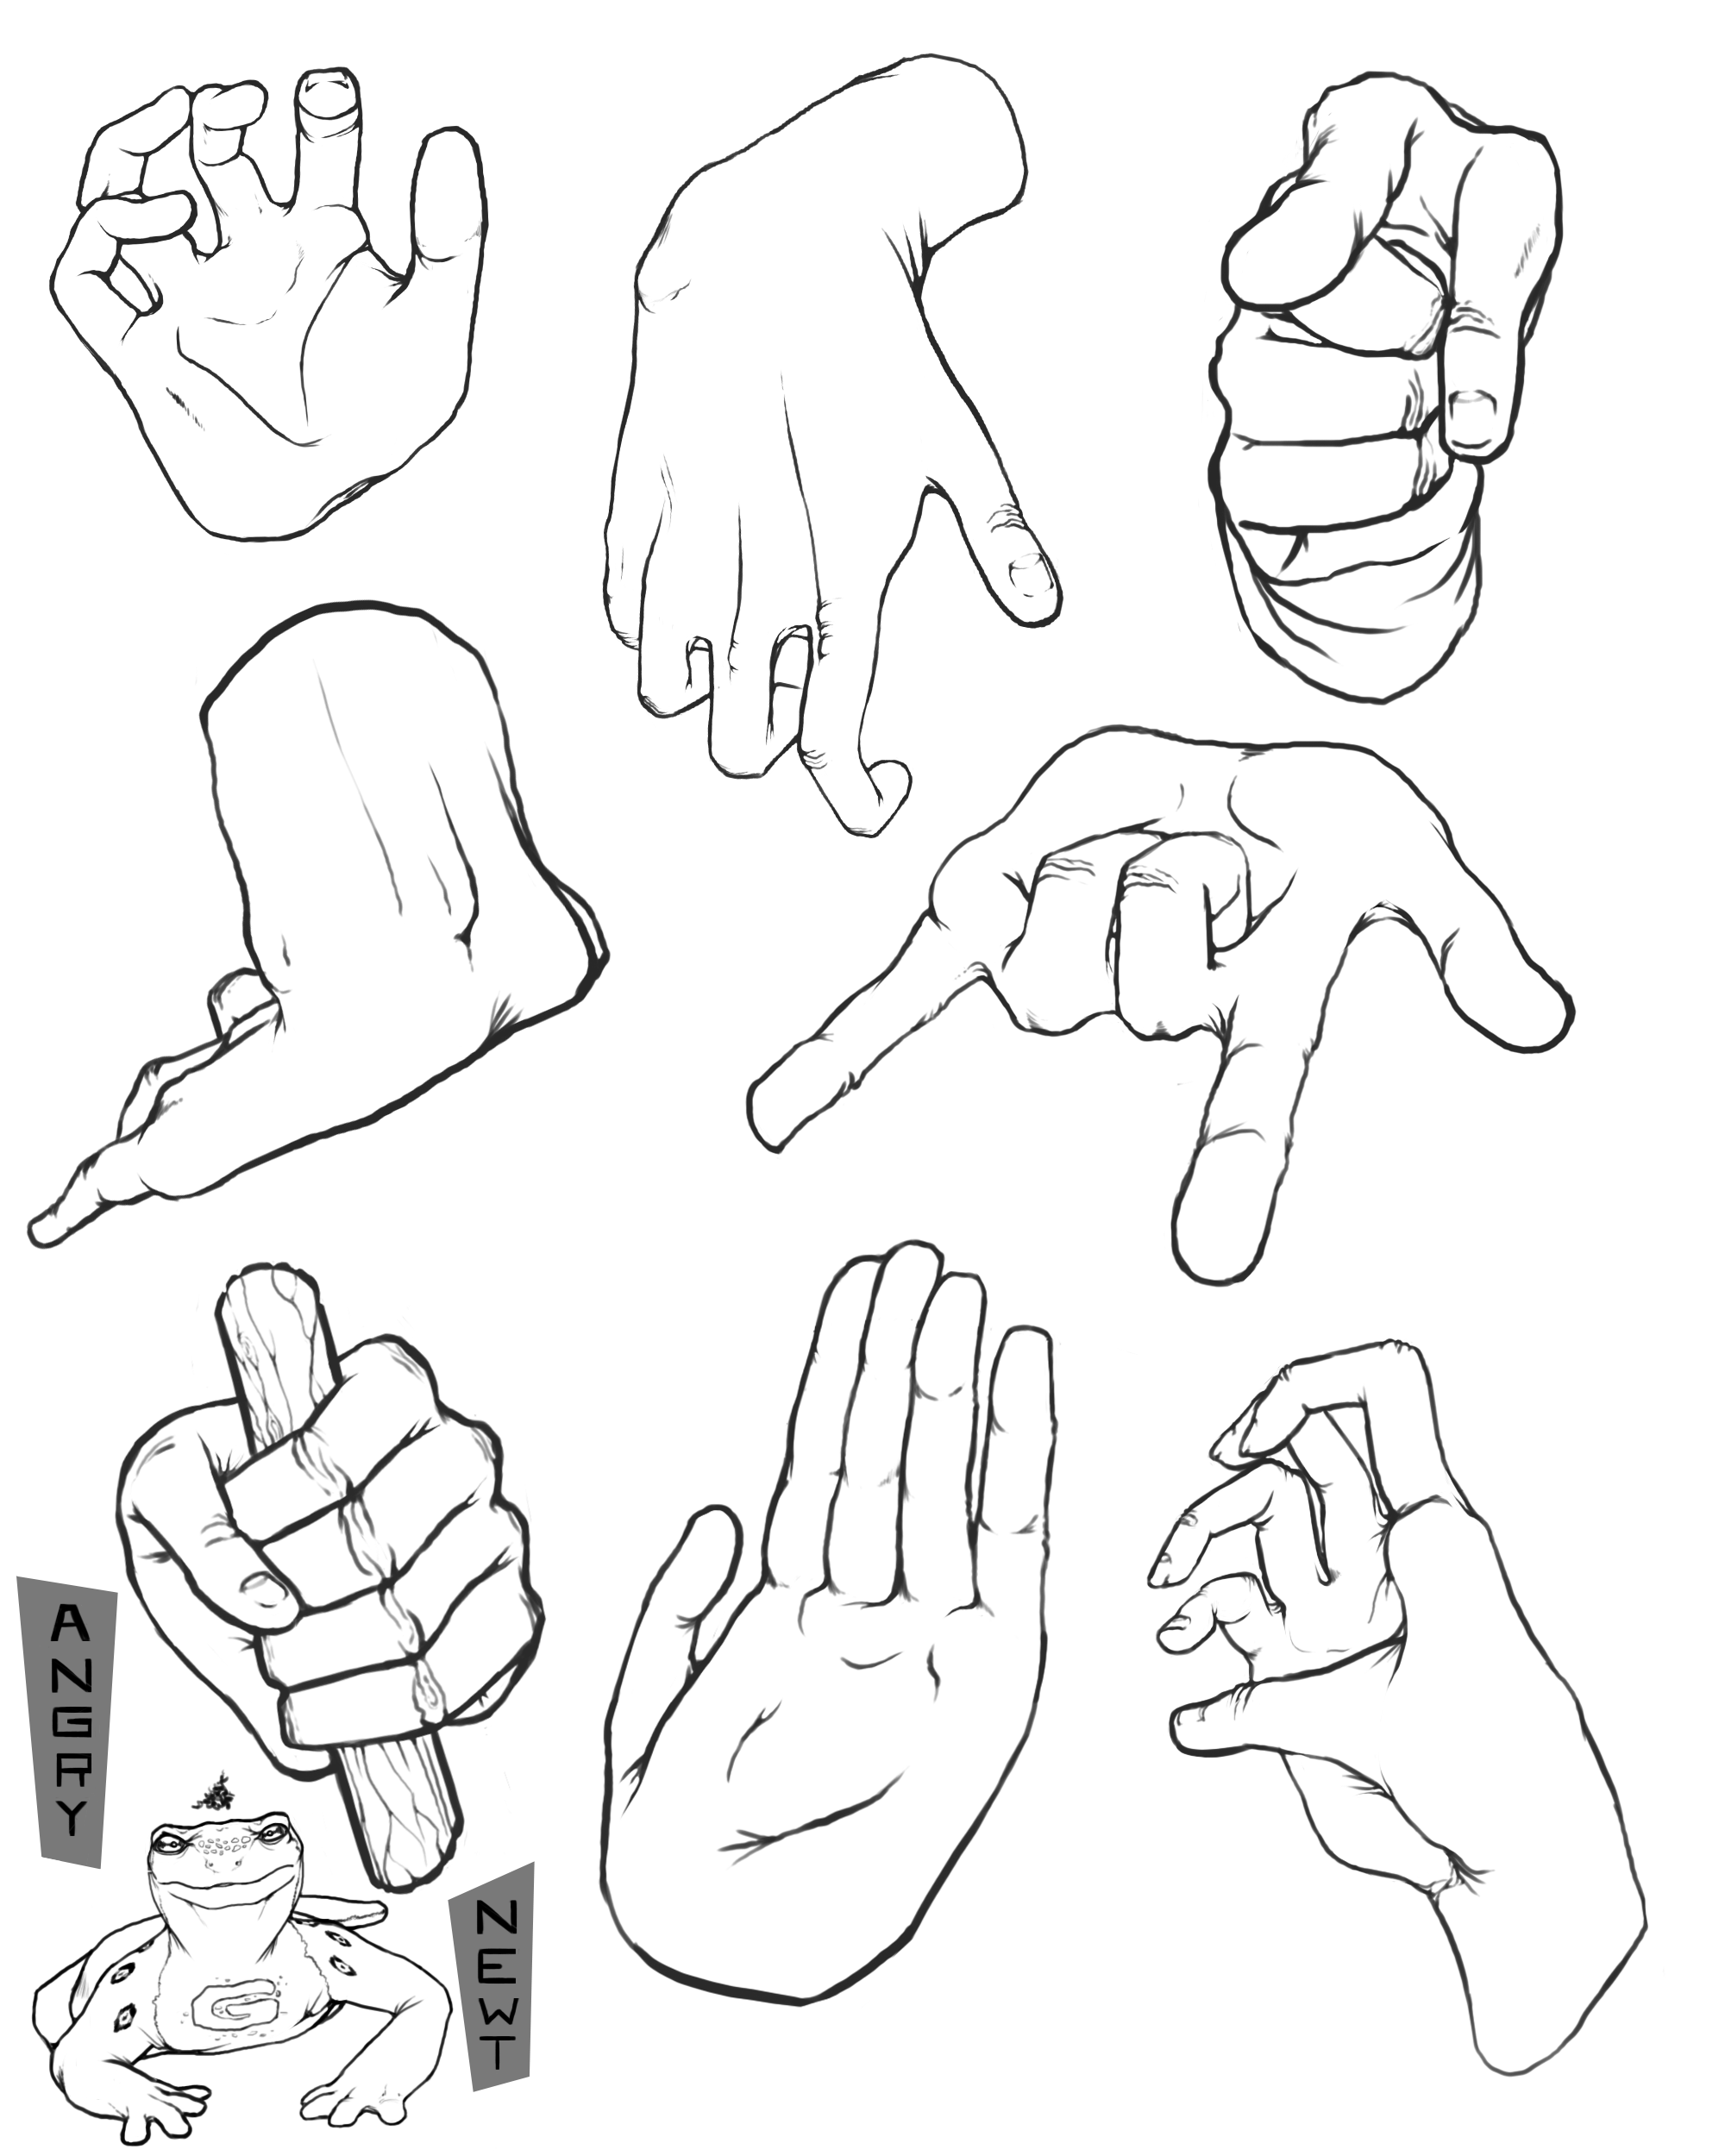 Page 2 | Hands gestures Vectors & Illustrations for Free Download | Freepik